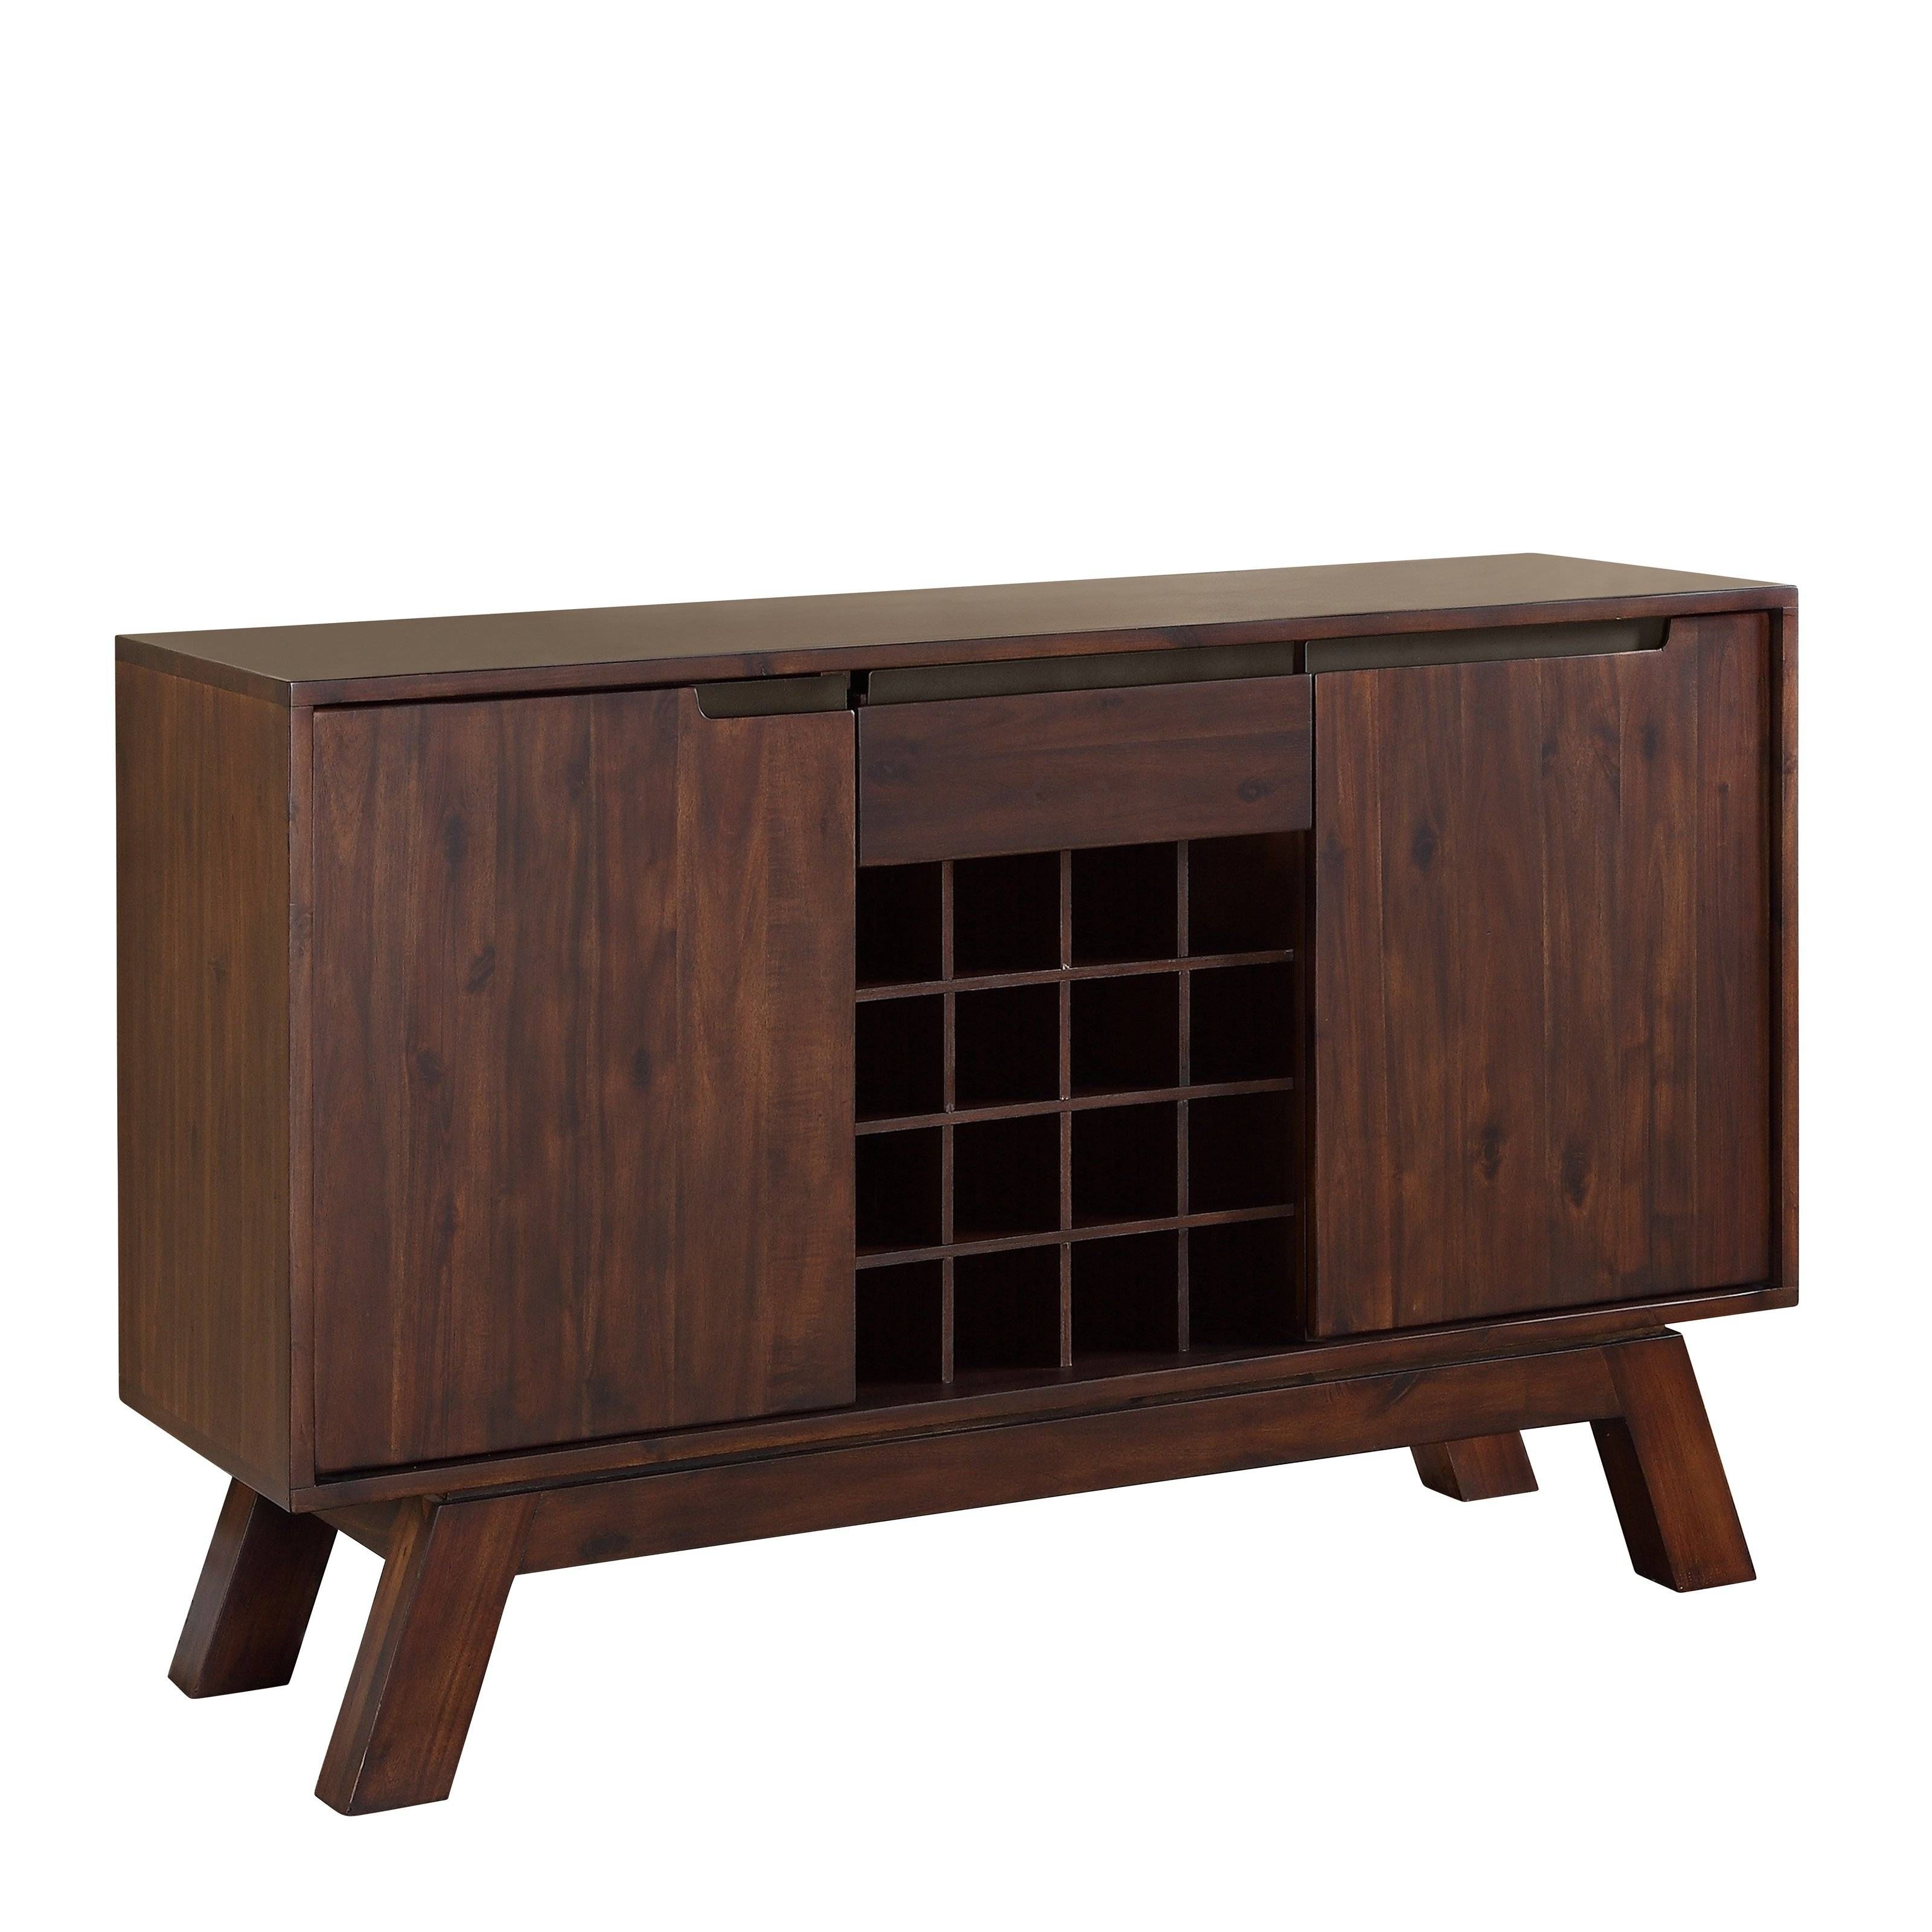 Modus Portland Solid Wood Sideboard – Medium Walnut | Hayneedle With Solid Wood Sideboards (View 13 of 15)